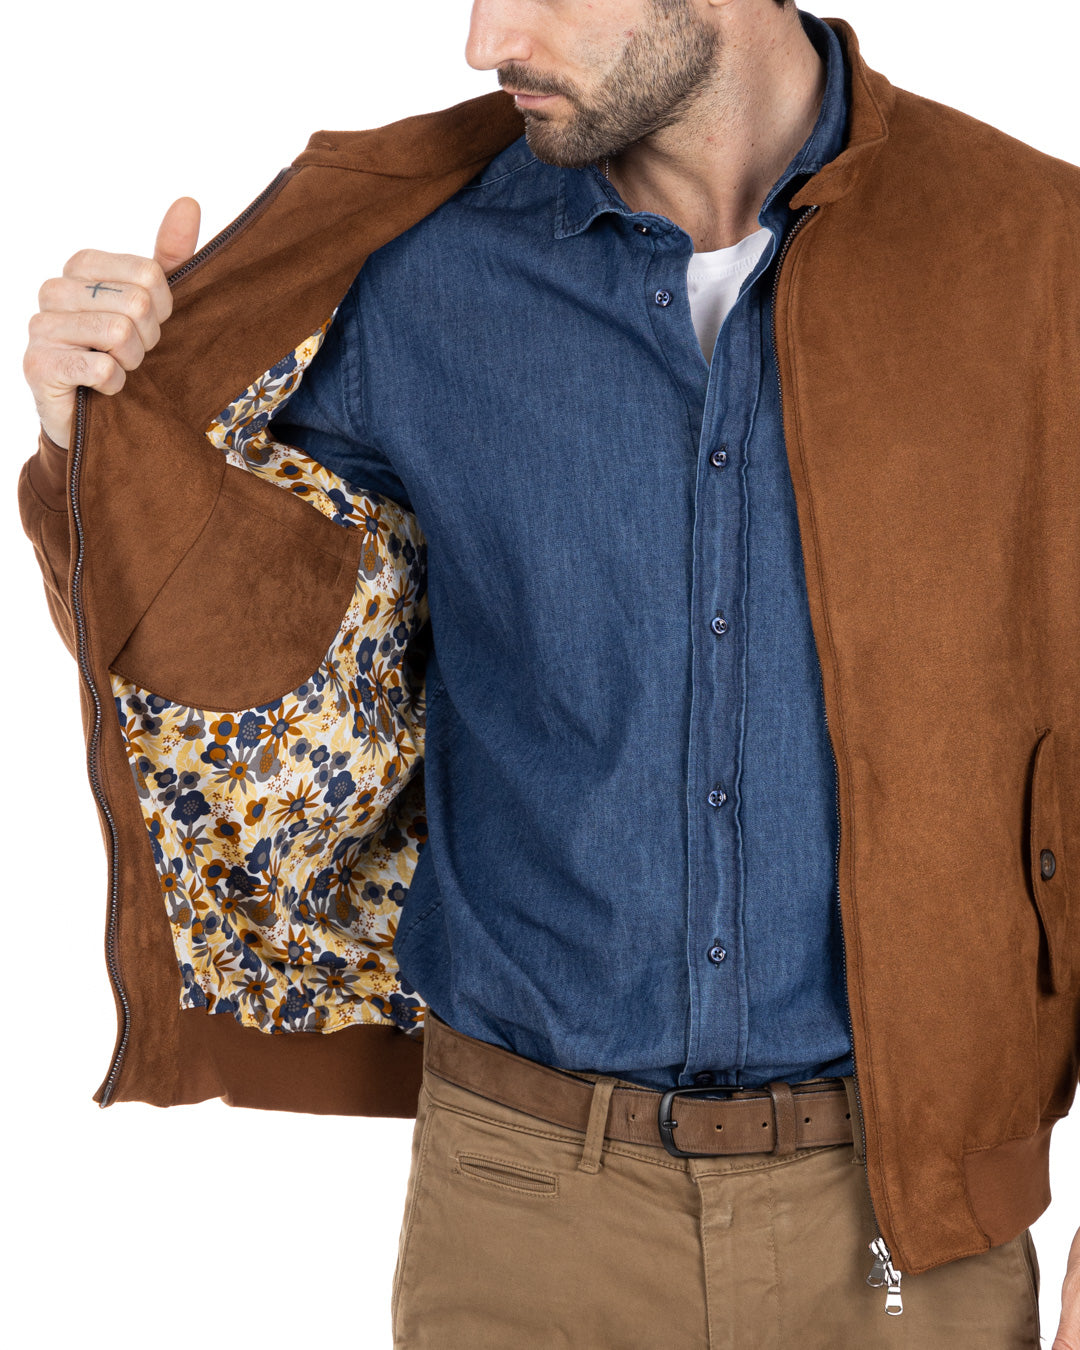 Alis - camel eco-suede jacket with zip